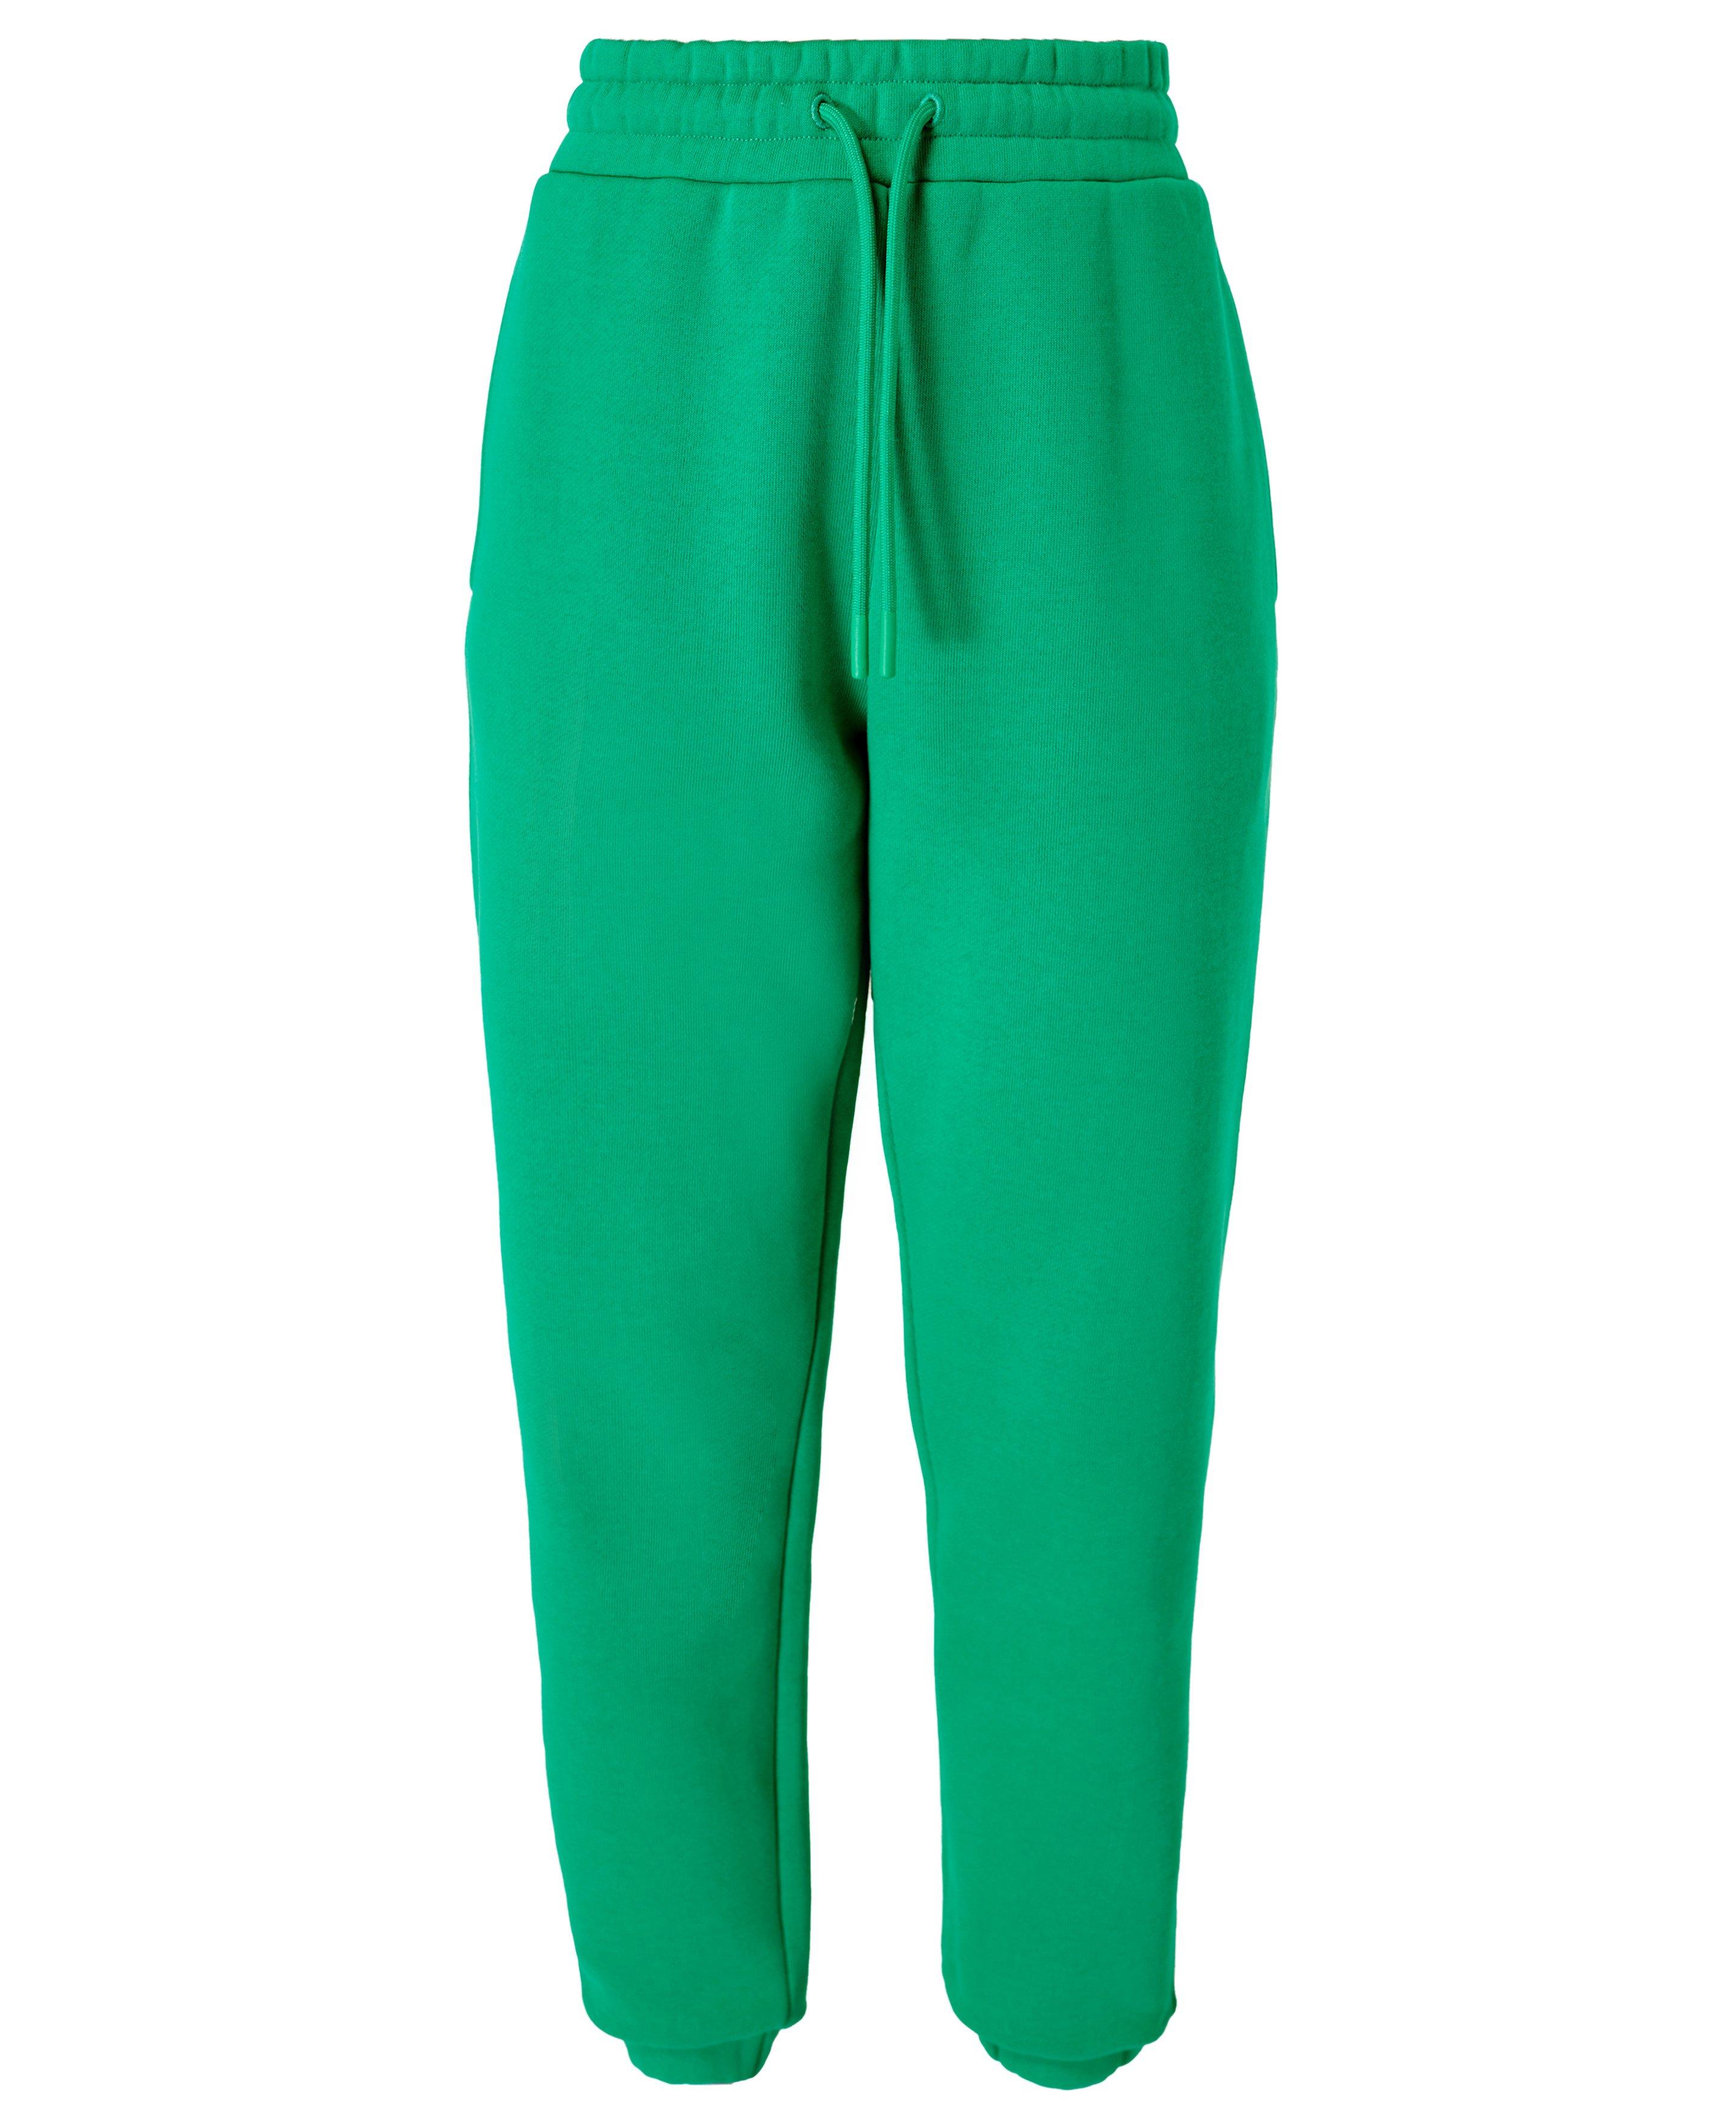 Powerhouse Jogger - Vivid Green  Women's Trousers & Yoga Pants